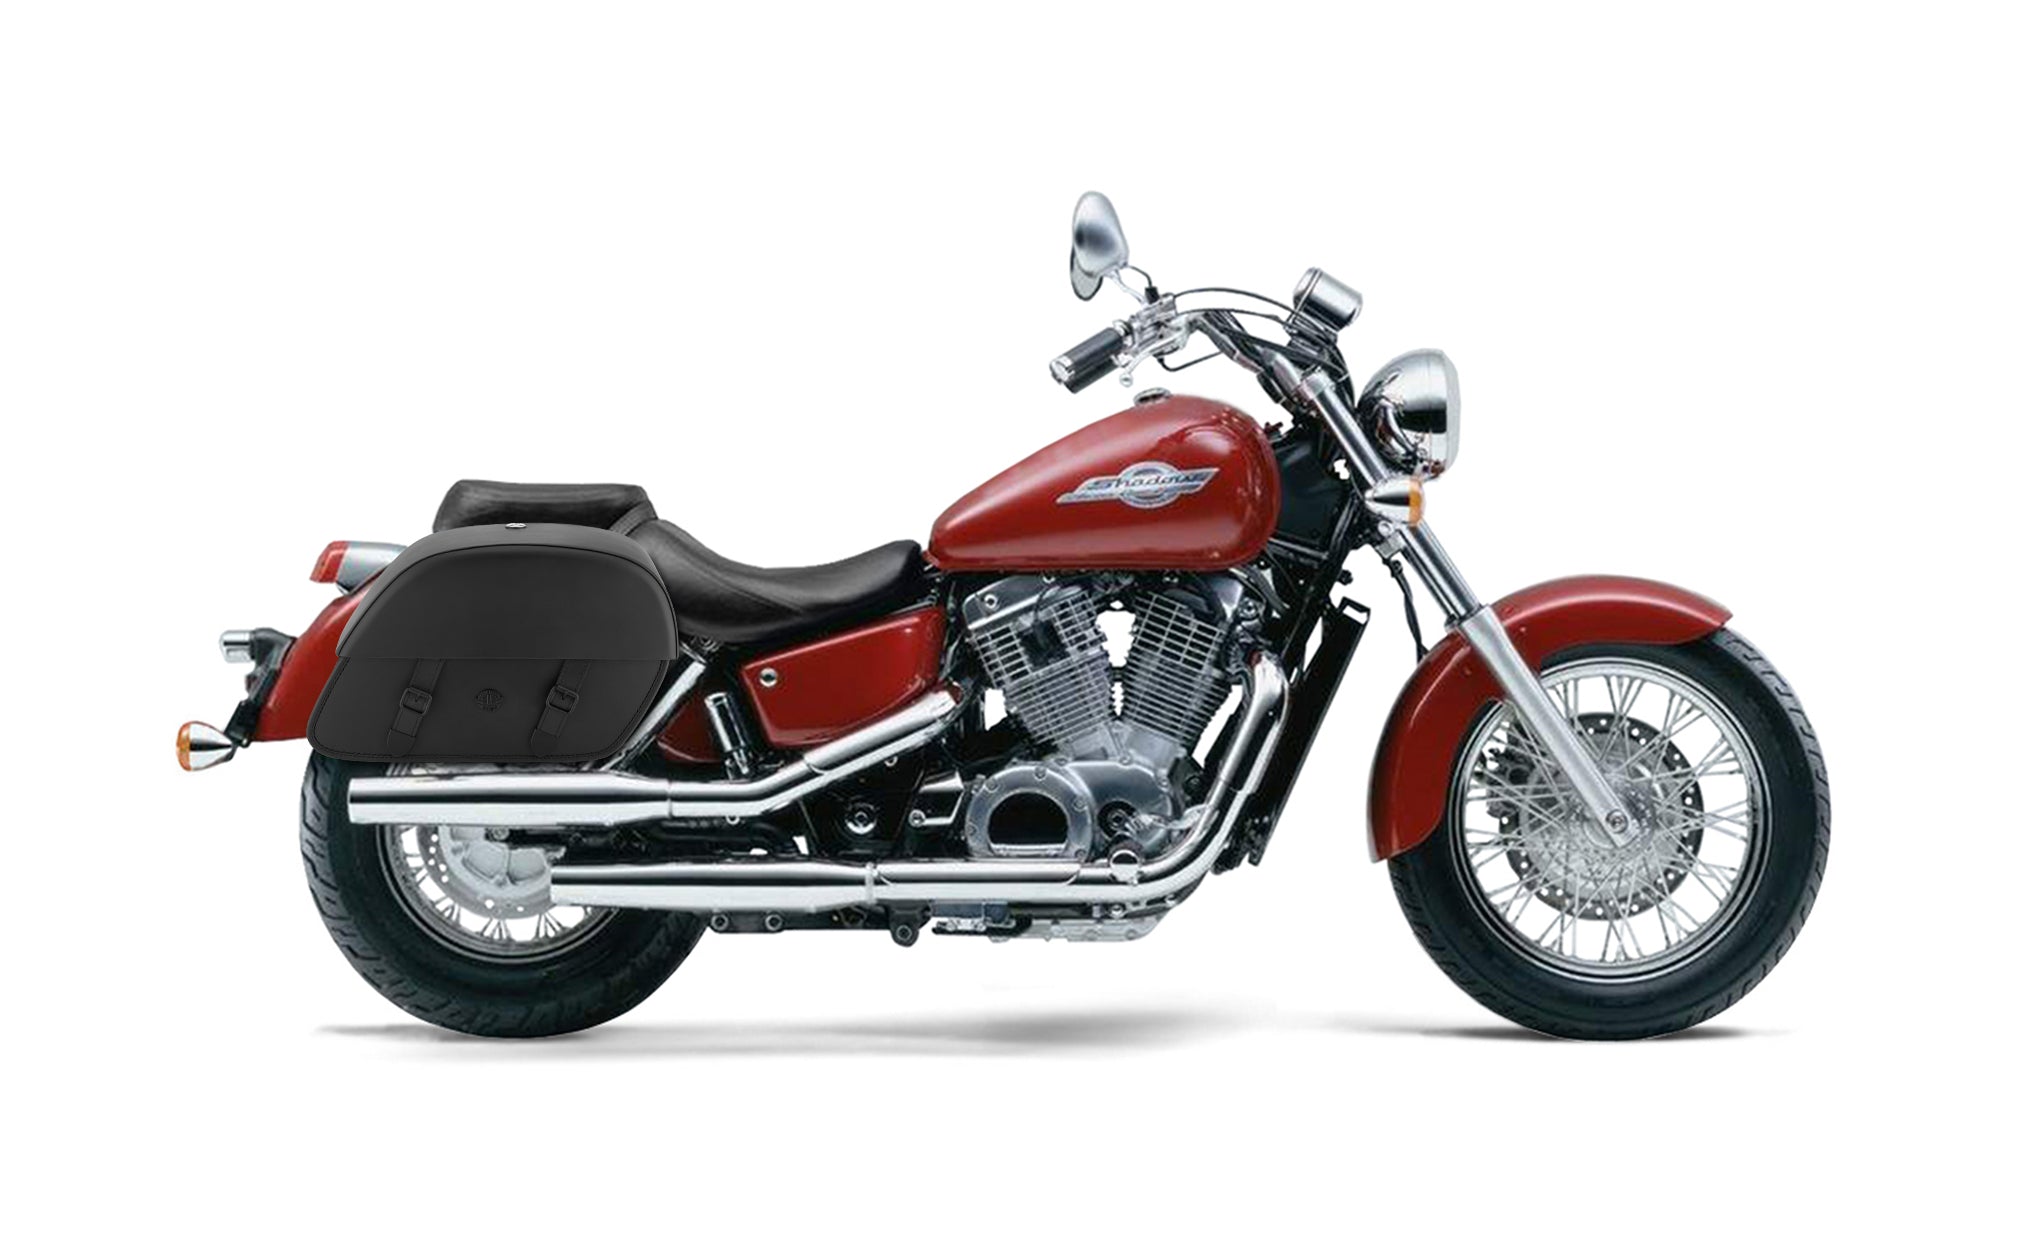 28L - Baelor Medium Shadow 1100 Ace Motorcycle Saddlebags @expand